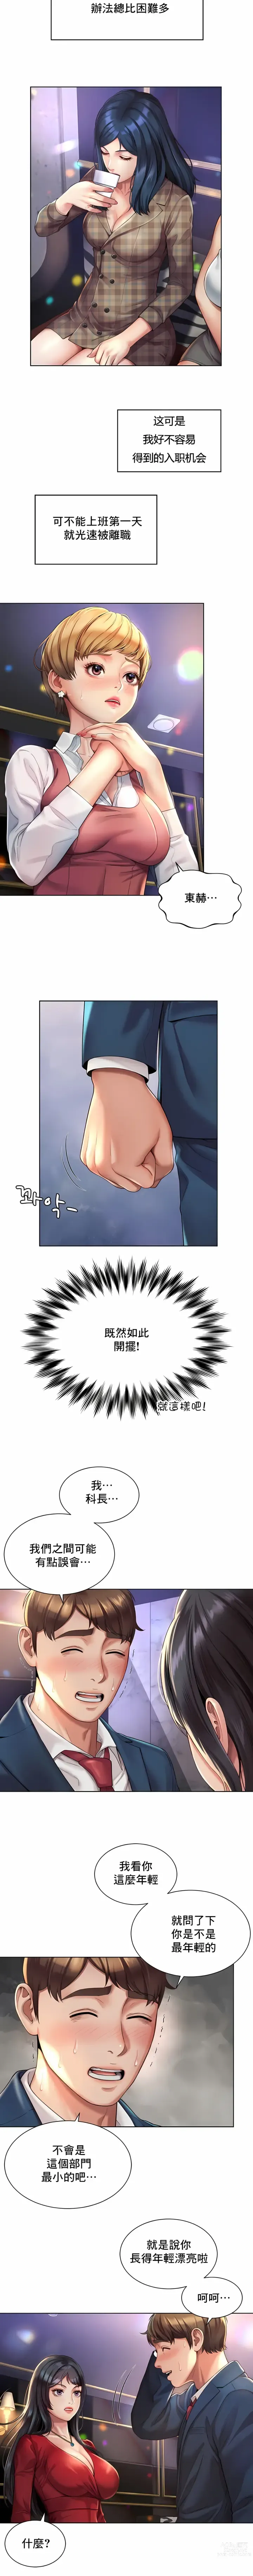 Page 23 of manga 职场爱恋